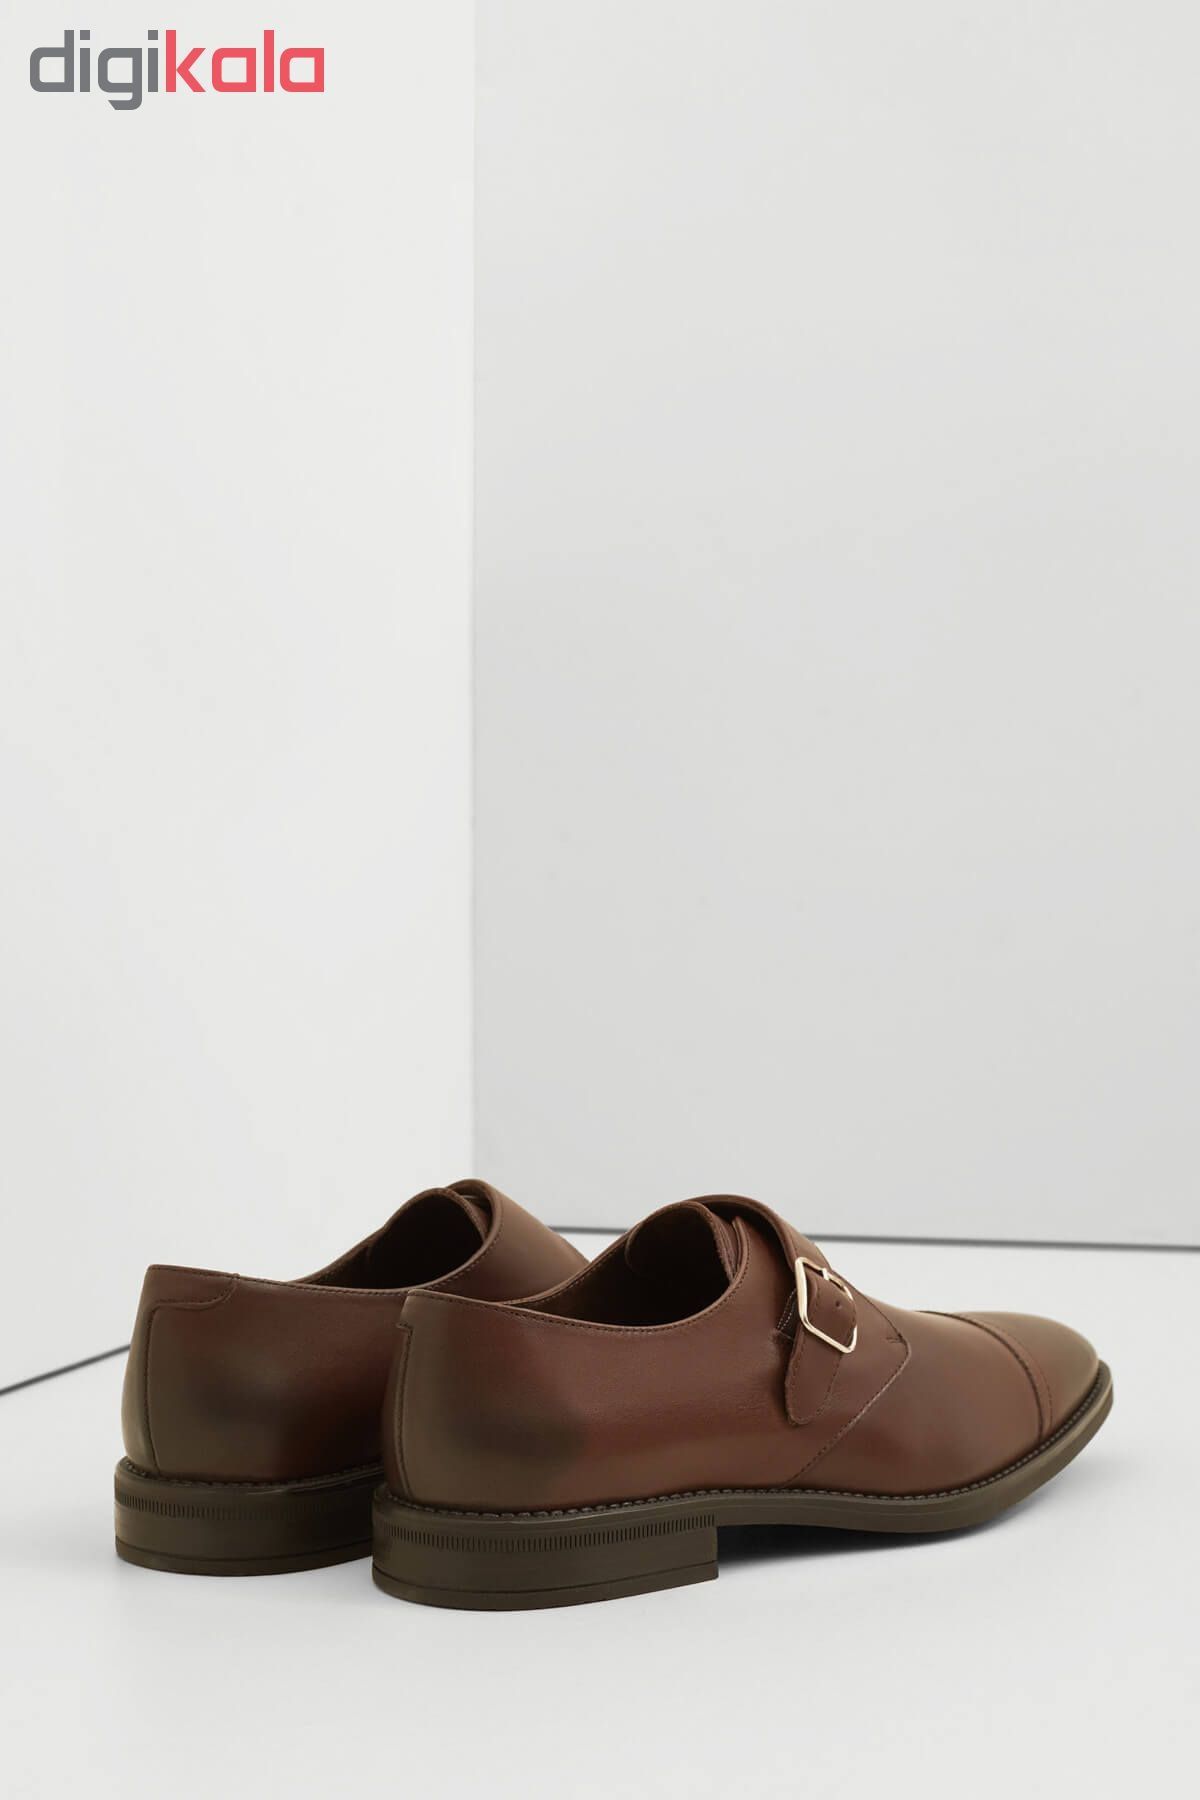 کفش مردانه  مدل Leather monk-strap -  - 4